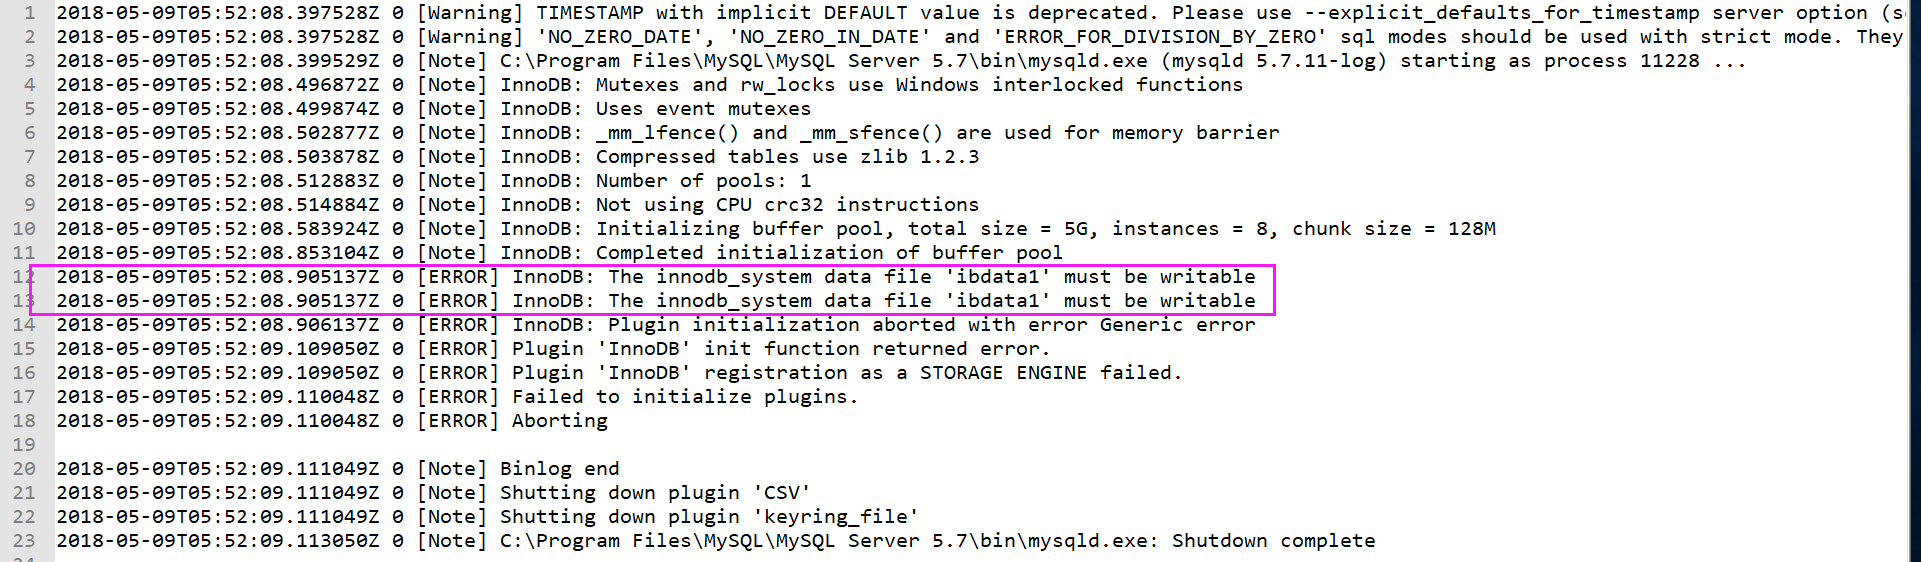 mysql5.7服务器The innodb_system data file 'ibdata1' must be writable导致无法启动服务器 